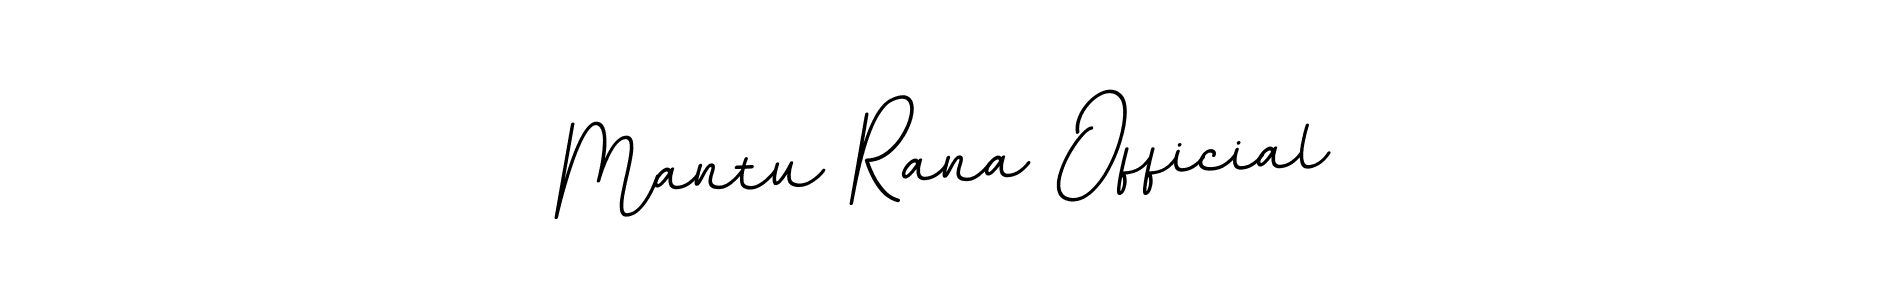 How to Draw Mantu Rana Official signature style? BallpointsItalic-DORy9 is a latest design signature styles for name Mantu Rana Official. Mantu Rana Official signature style 11 images and pictures png